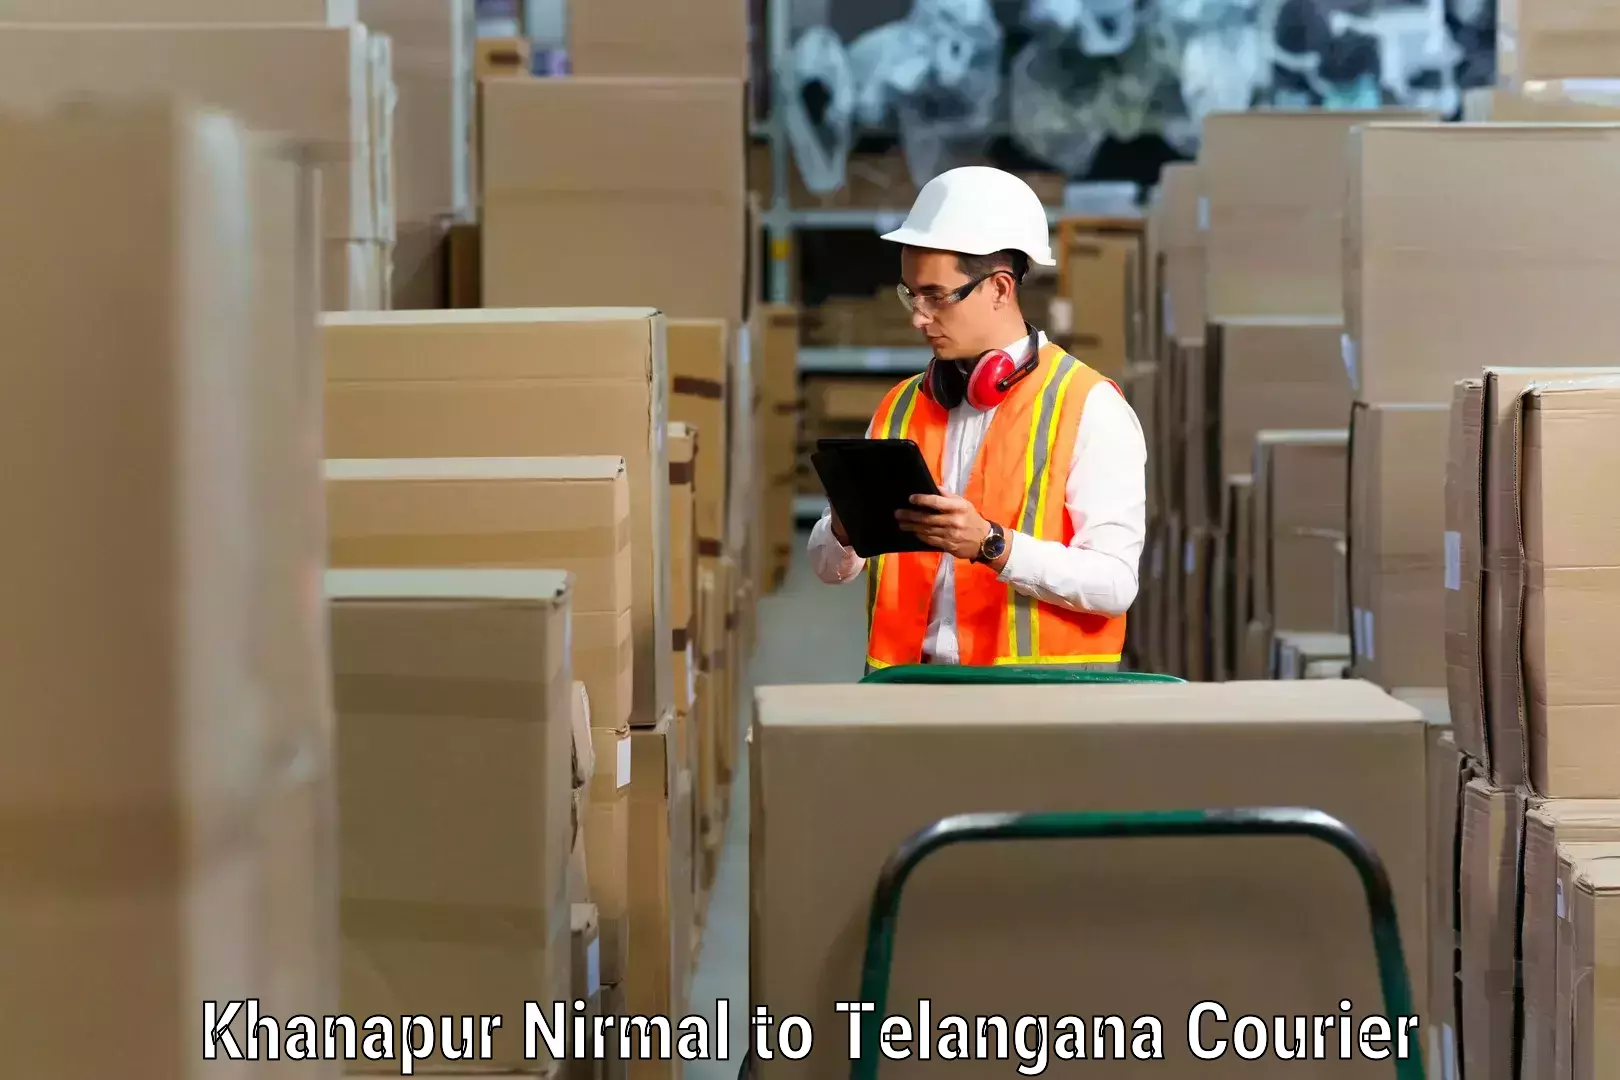 Furniture delivery service Khanapur Nirmal to Mulugu